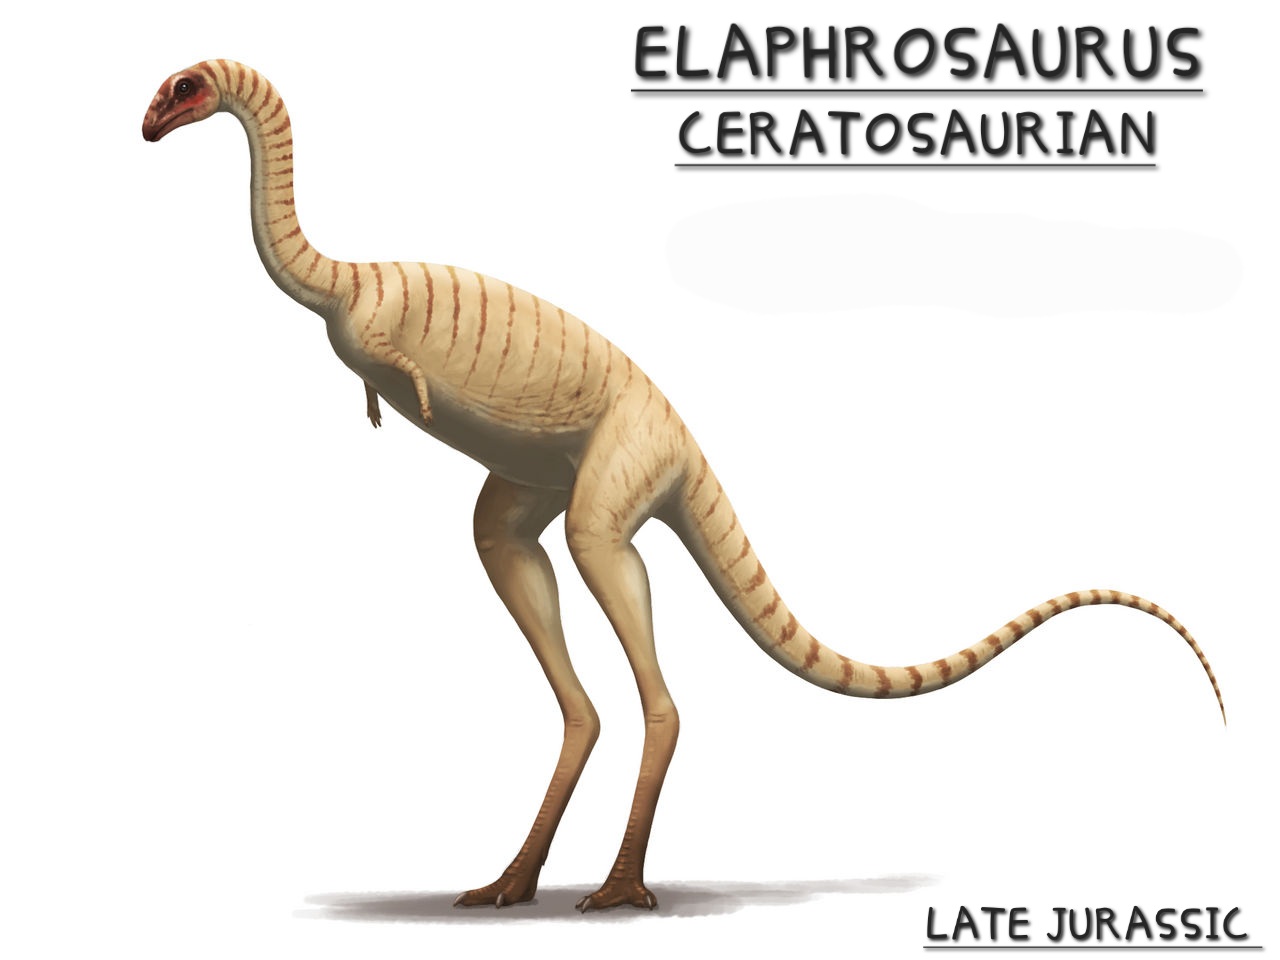 elaphrosaurus_by_y_forest_dfqvbvi-fullview.jpg